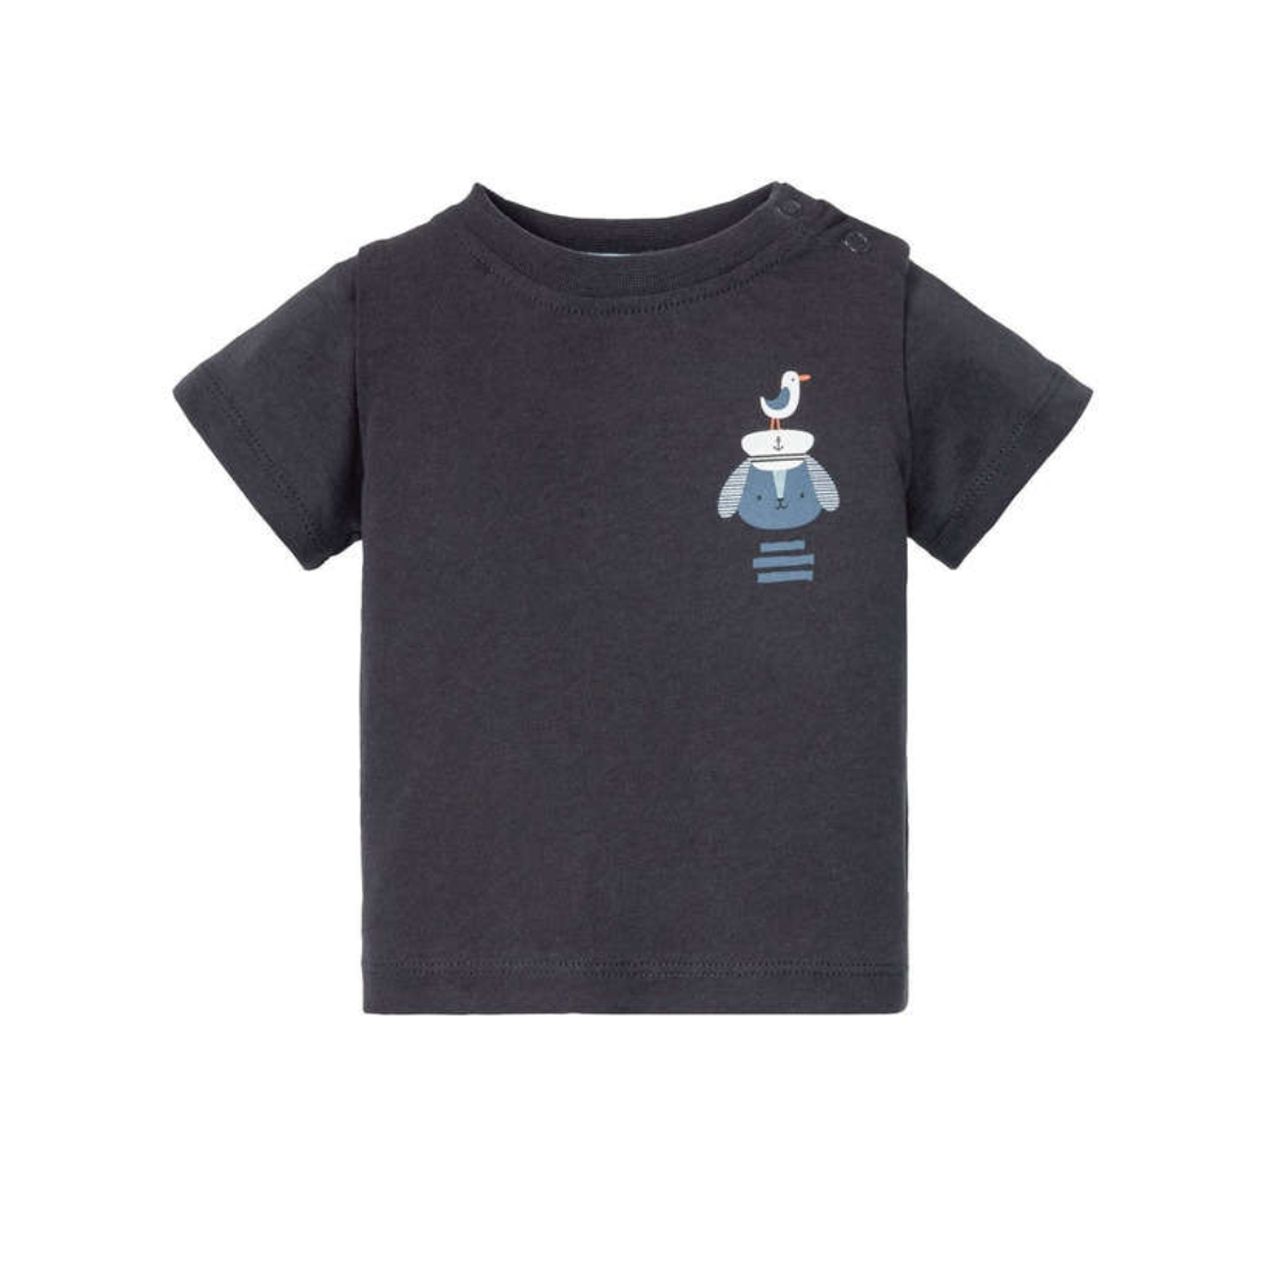 تی شرت آستین کوتاه نوزادی لوپیلو کد 3177 مجموعه 2 عددی -  - 2